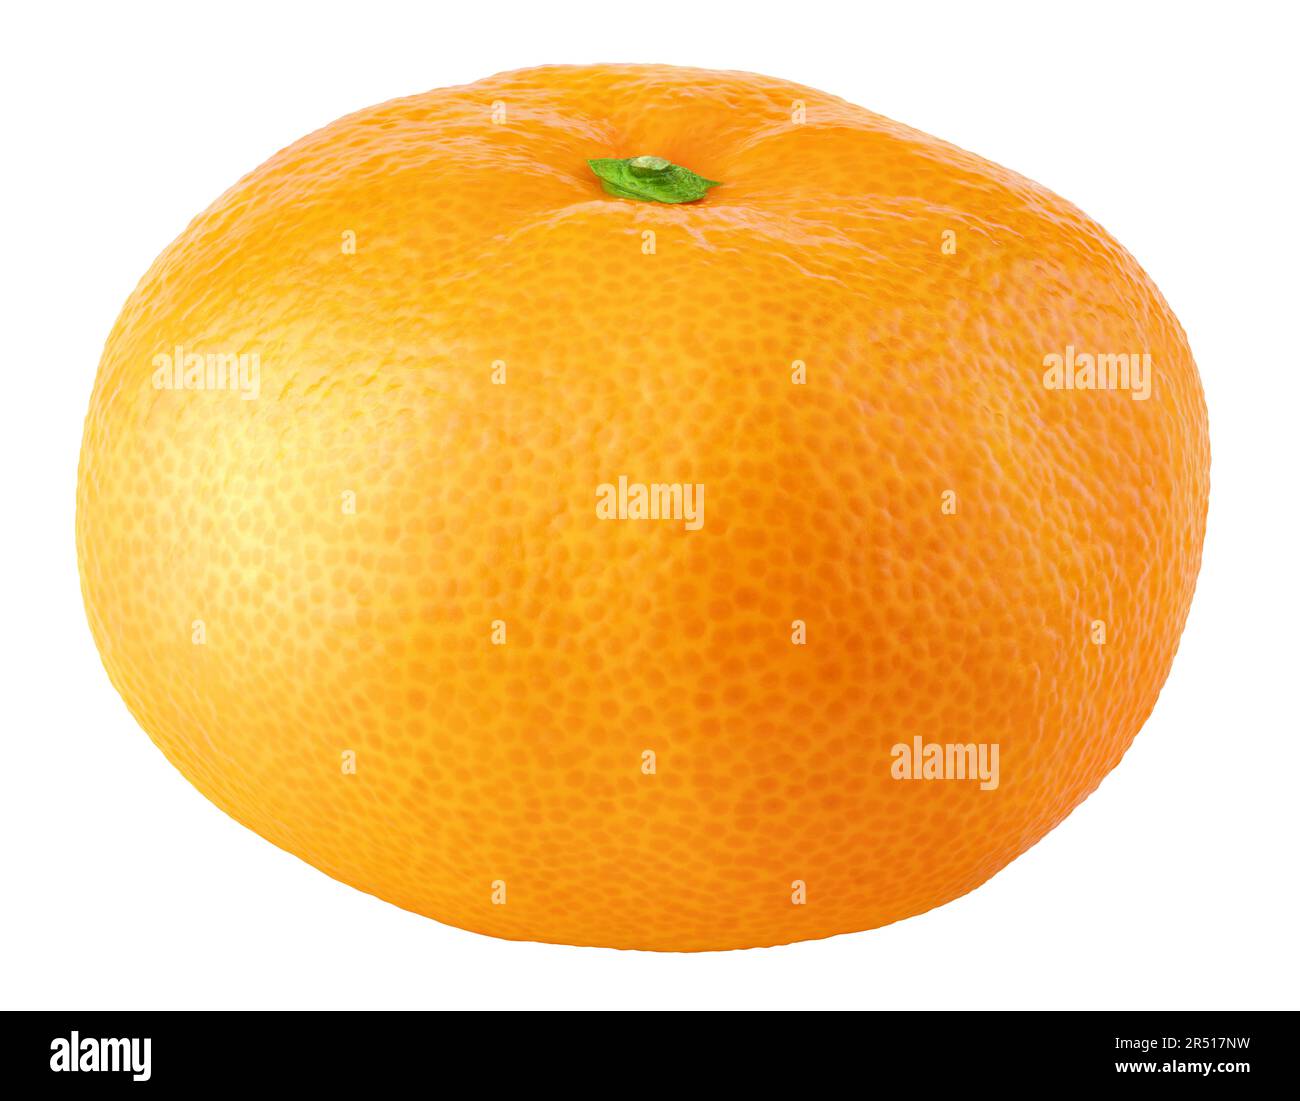 Whole flat orange tangerine citrus fruit isolated on white background. Full mandarin with clipping path. Full depth of field. Stock Photo